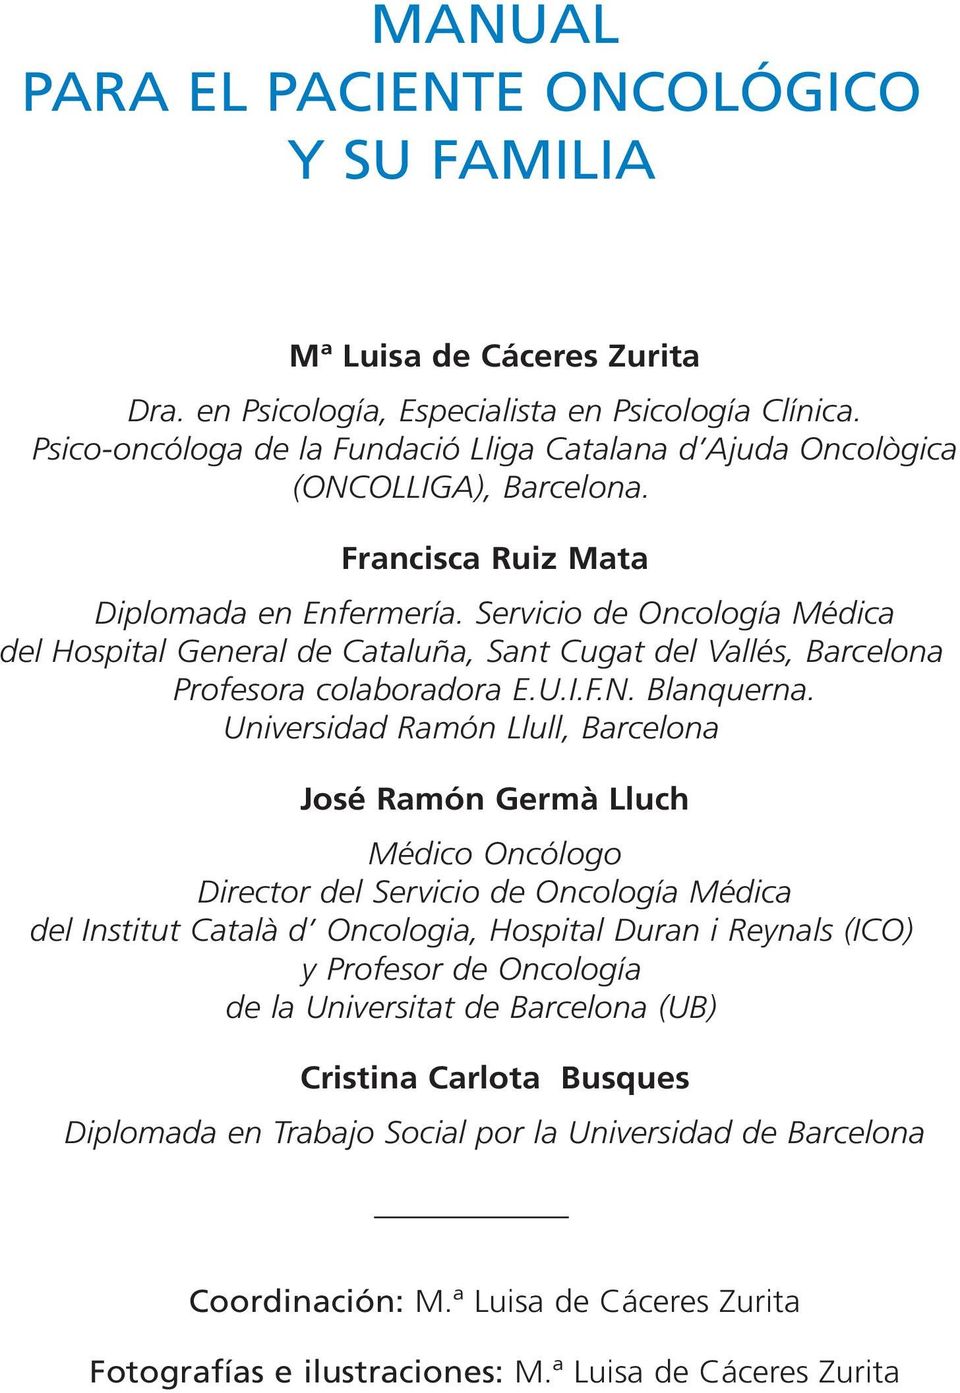 Servicio de Oncología Médica del Hospital General de Cataluña, Sant Cugat del Vallés, Barcelona Profesora colaboradora E.U.I.F.N. Blanquerna.